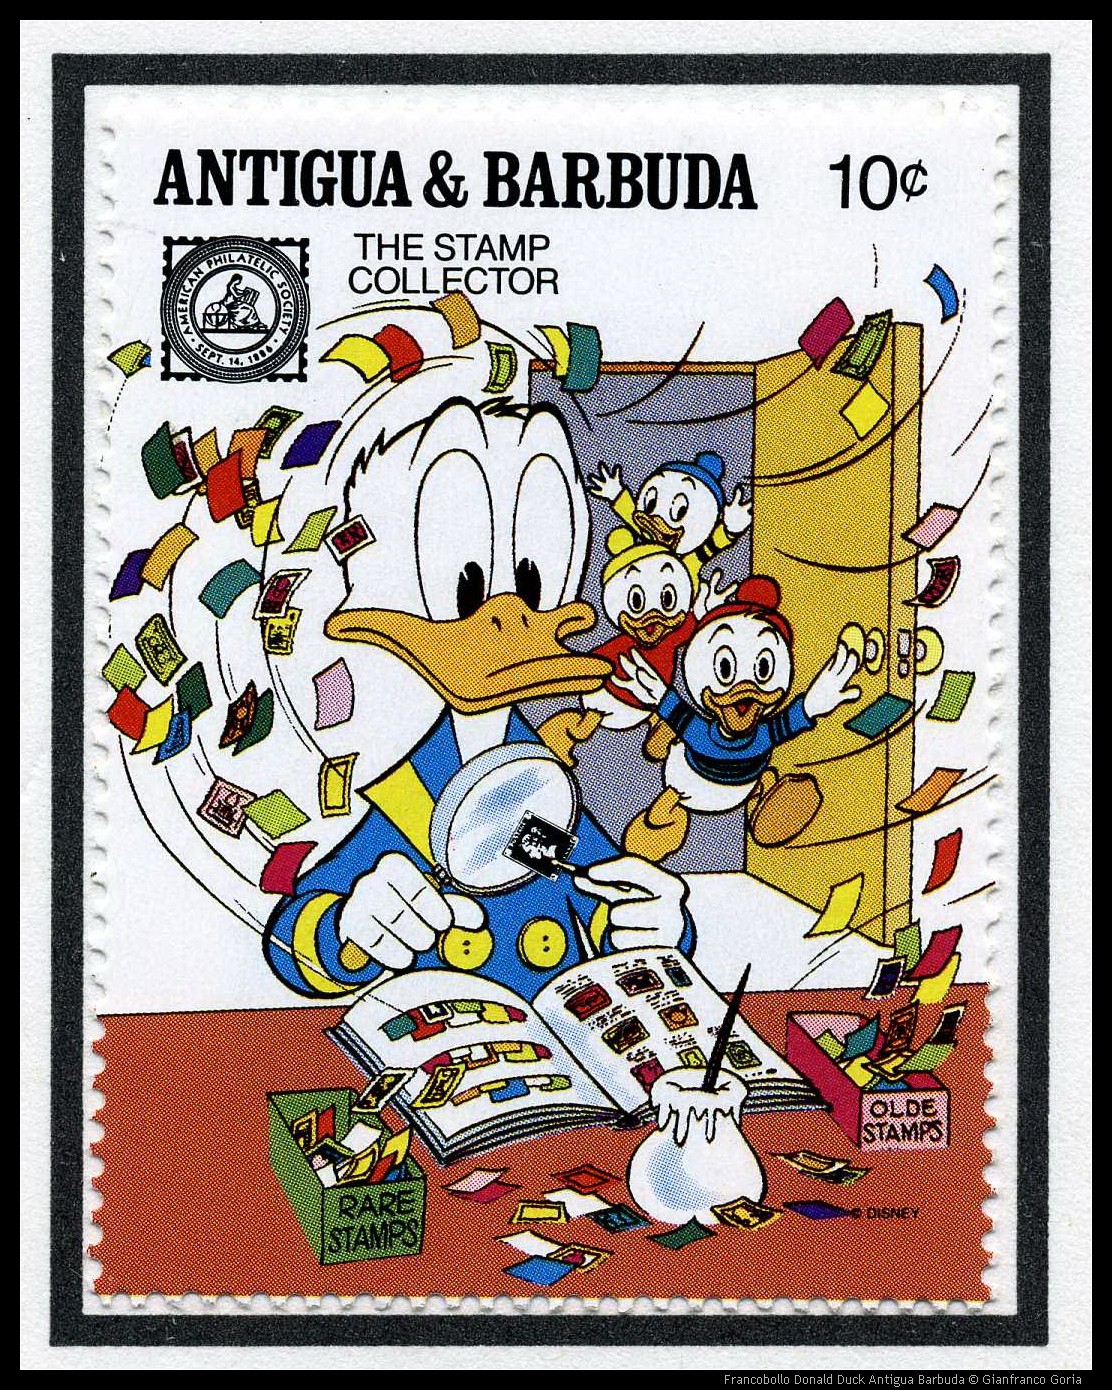 Francobollo Donald Duck Antigua Barbuda.jpg